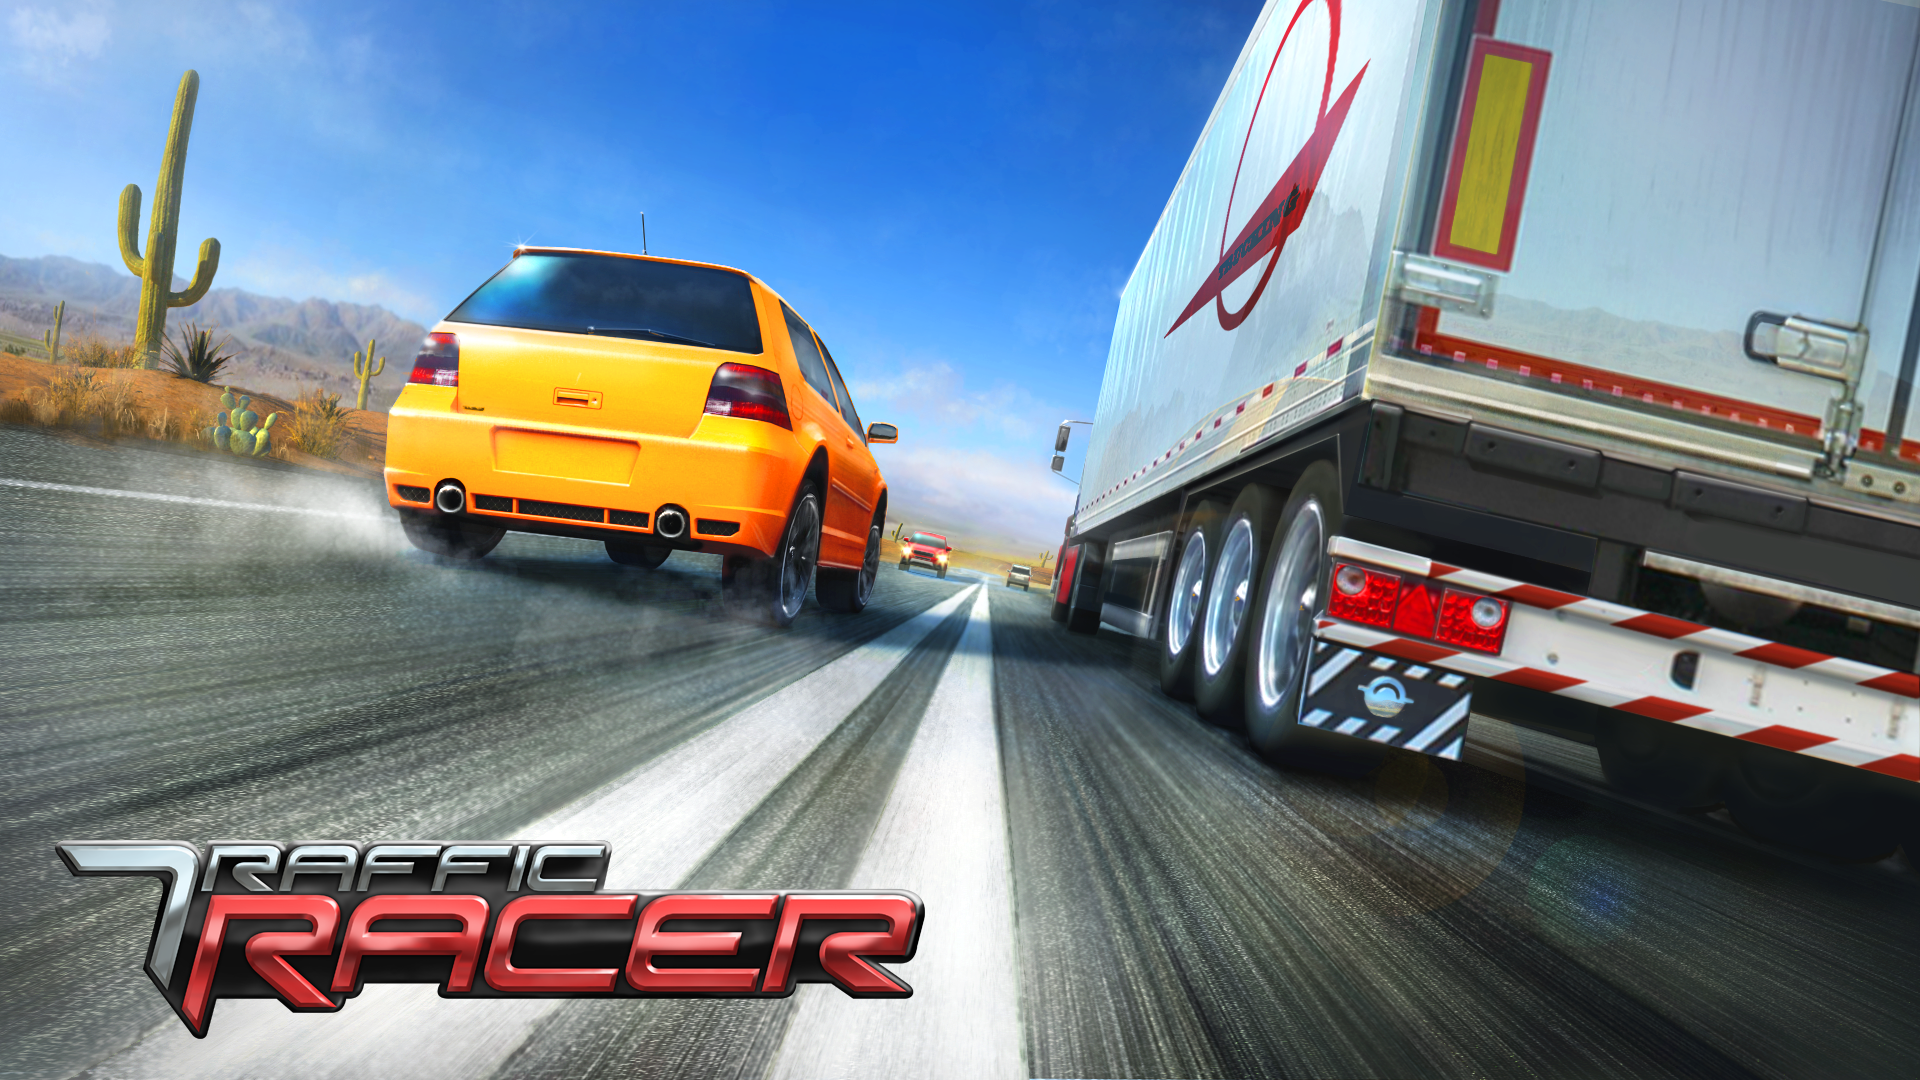 Traffic racing car. Машины трафик рейсер. Игра Traffic Racer игра. Игра Traffic Racer 2. Traffic Racer Pro: автогонки.